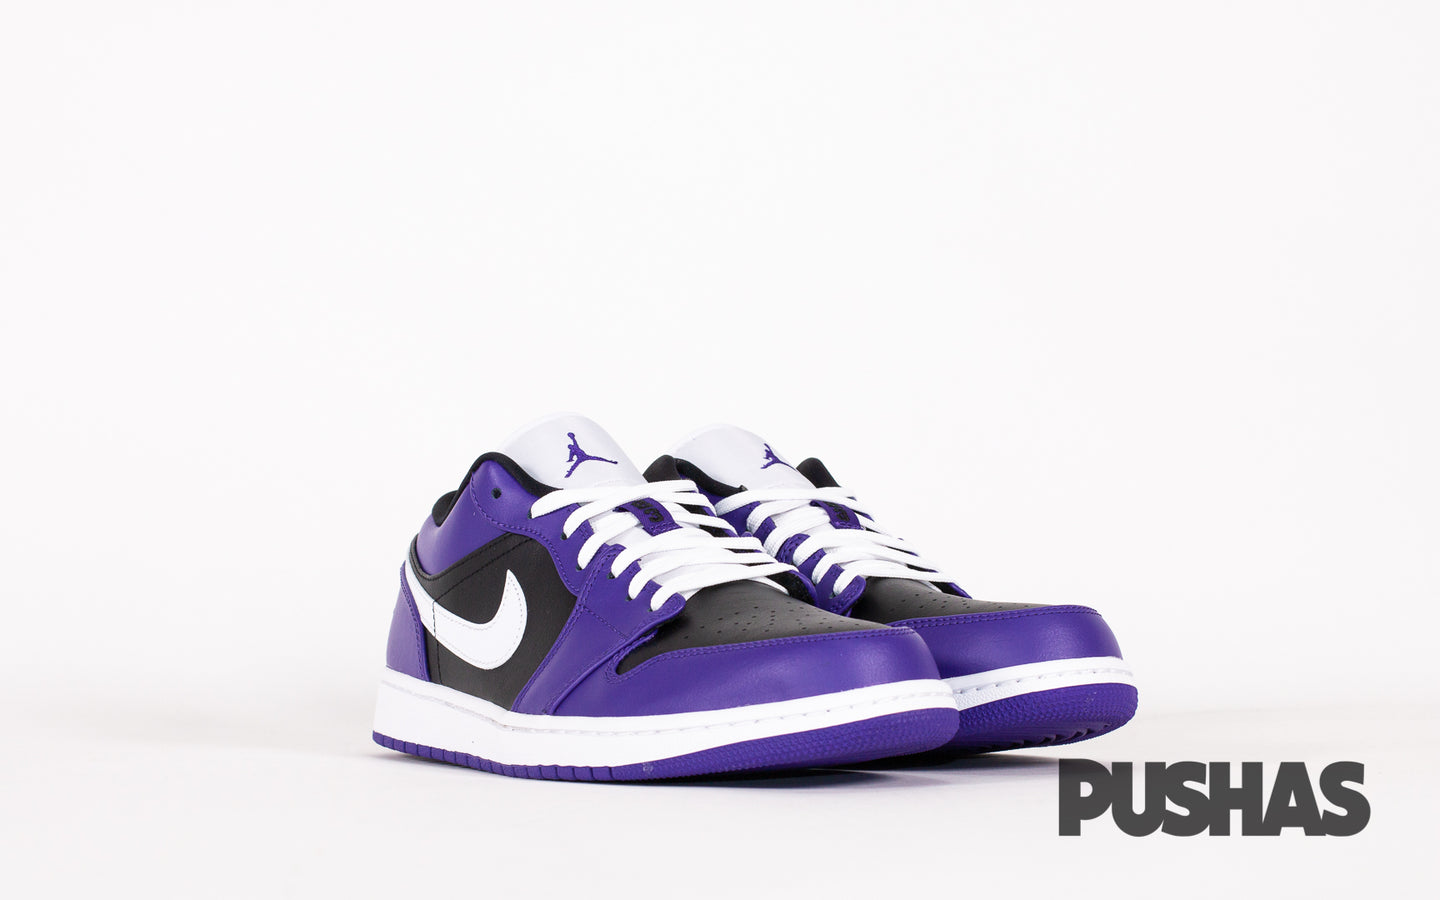 Air Jordan 1 Low Court Purple Black Pushas